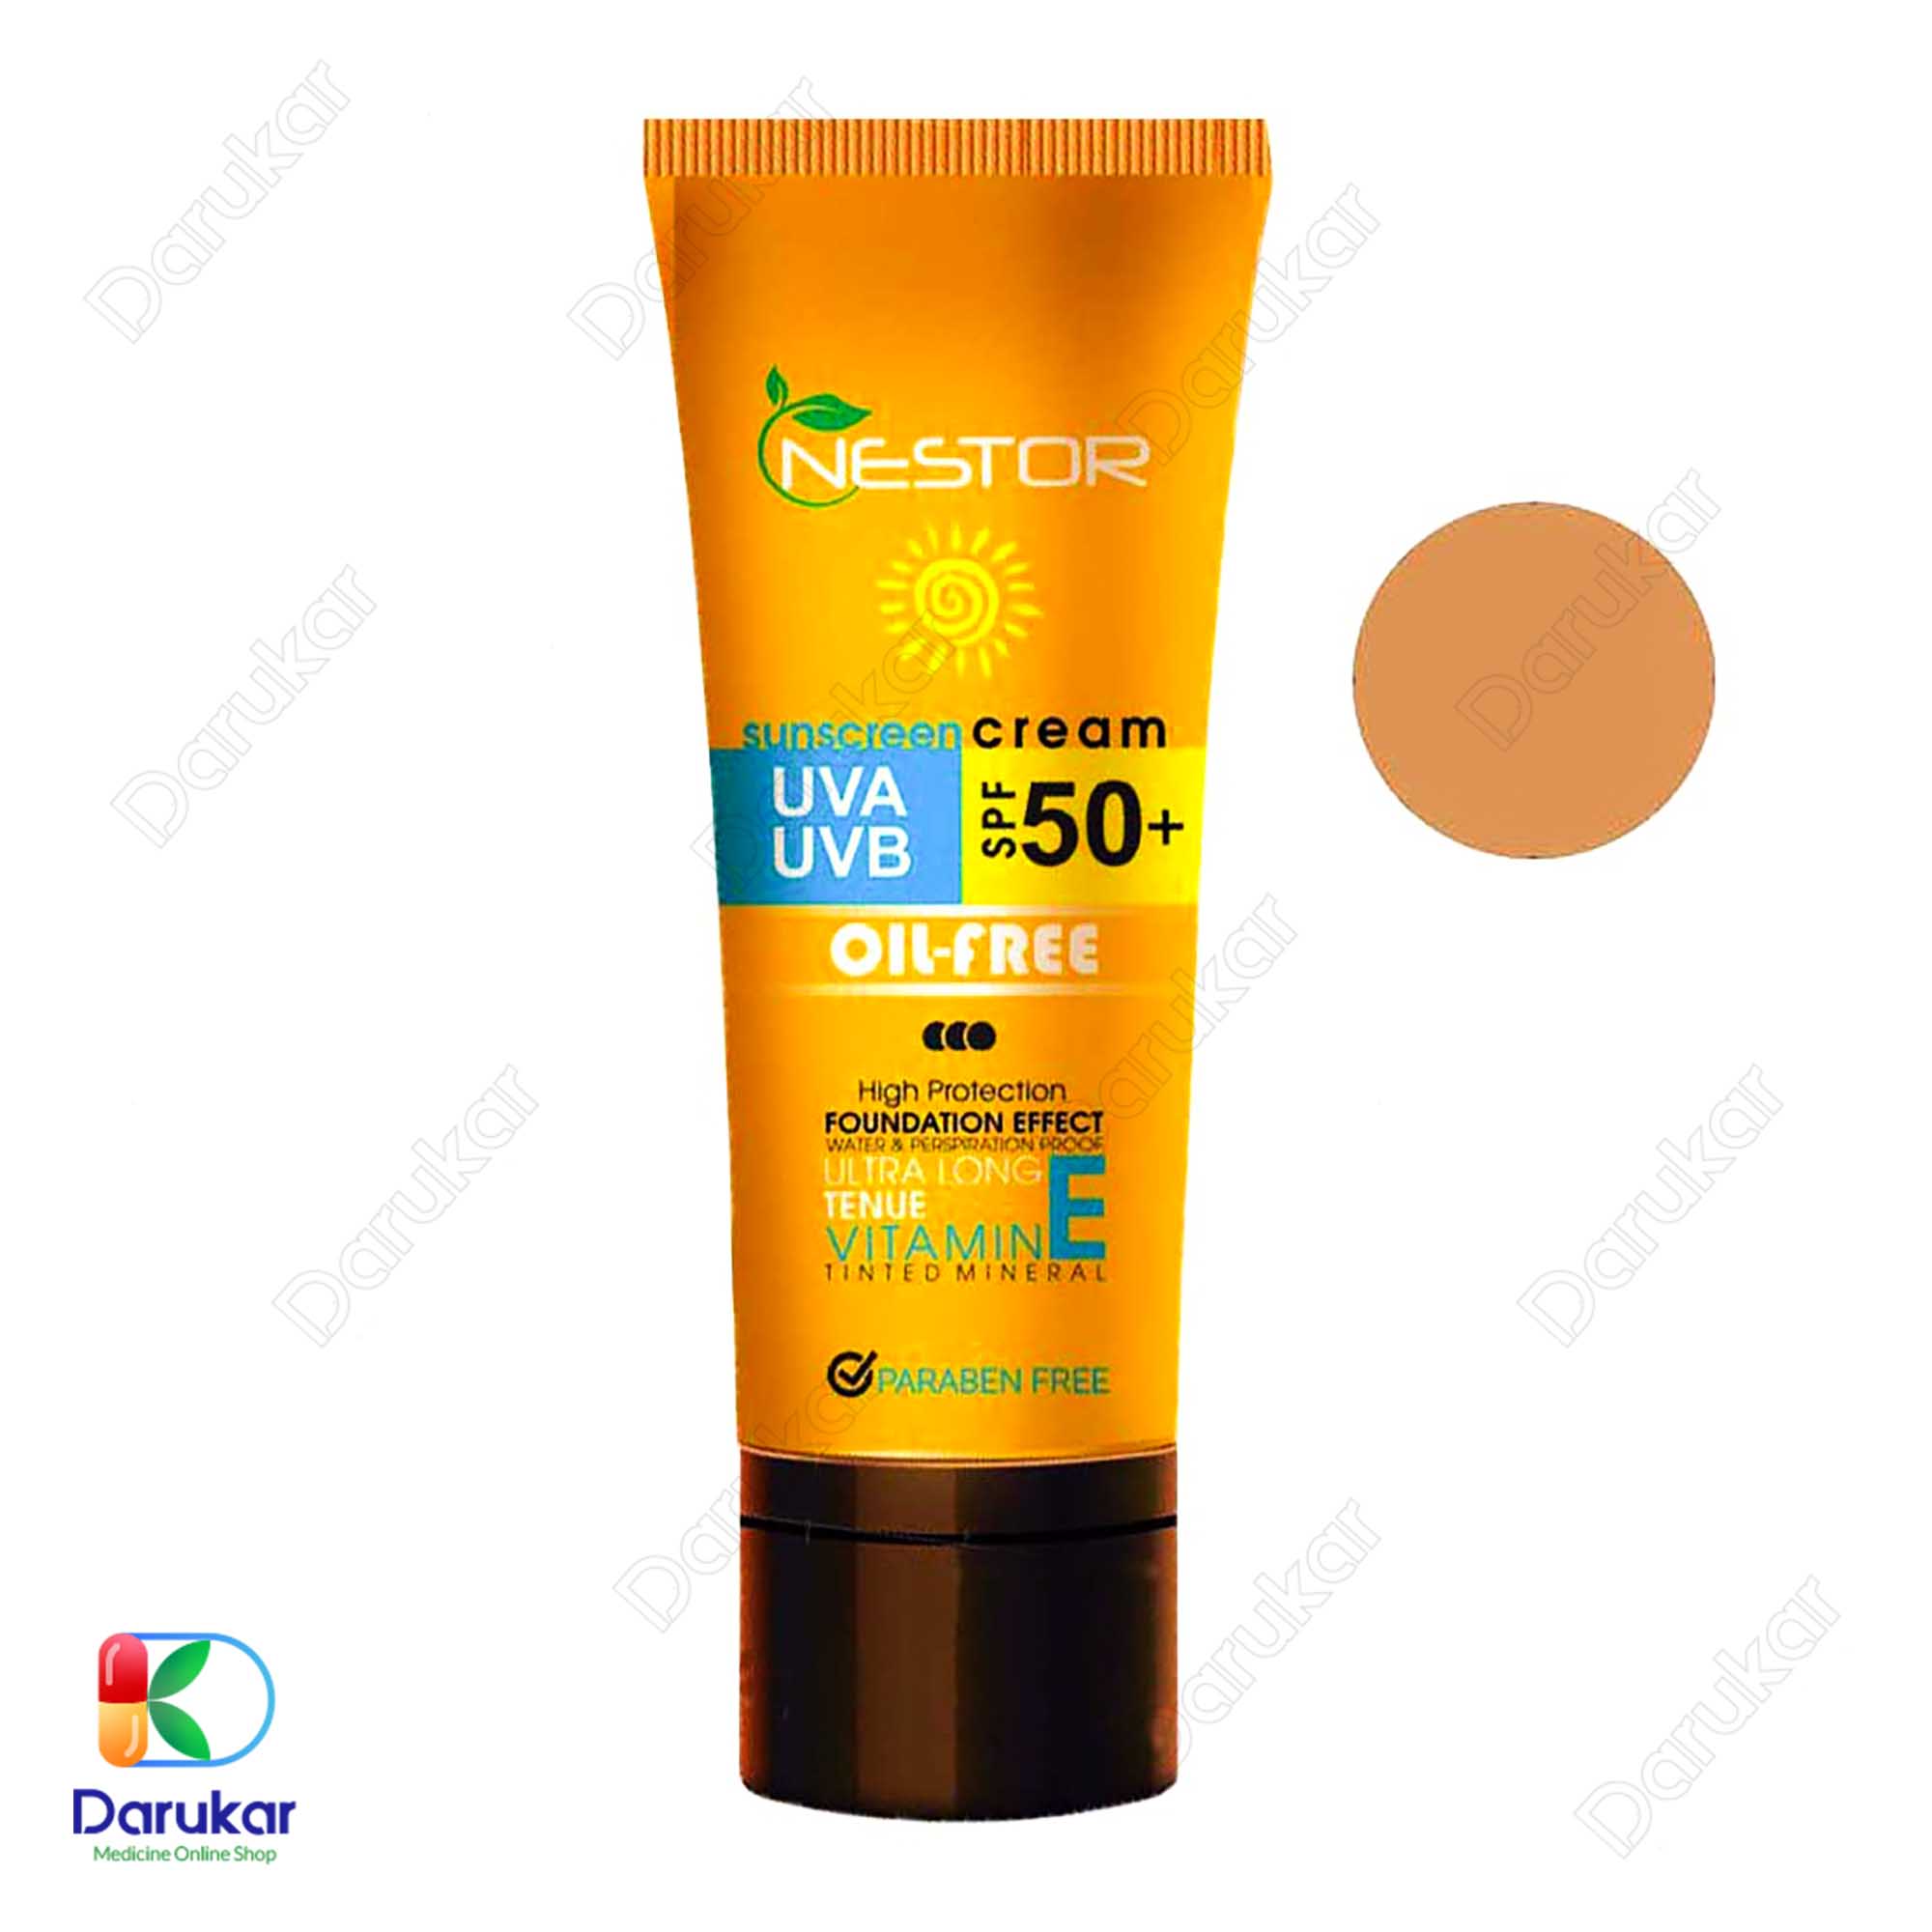 Nestor sunscreen cream oil free SPF50 1.5